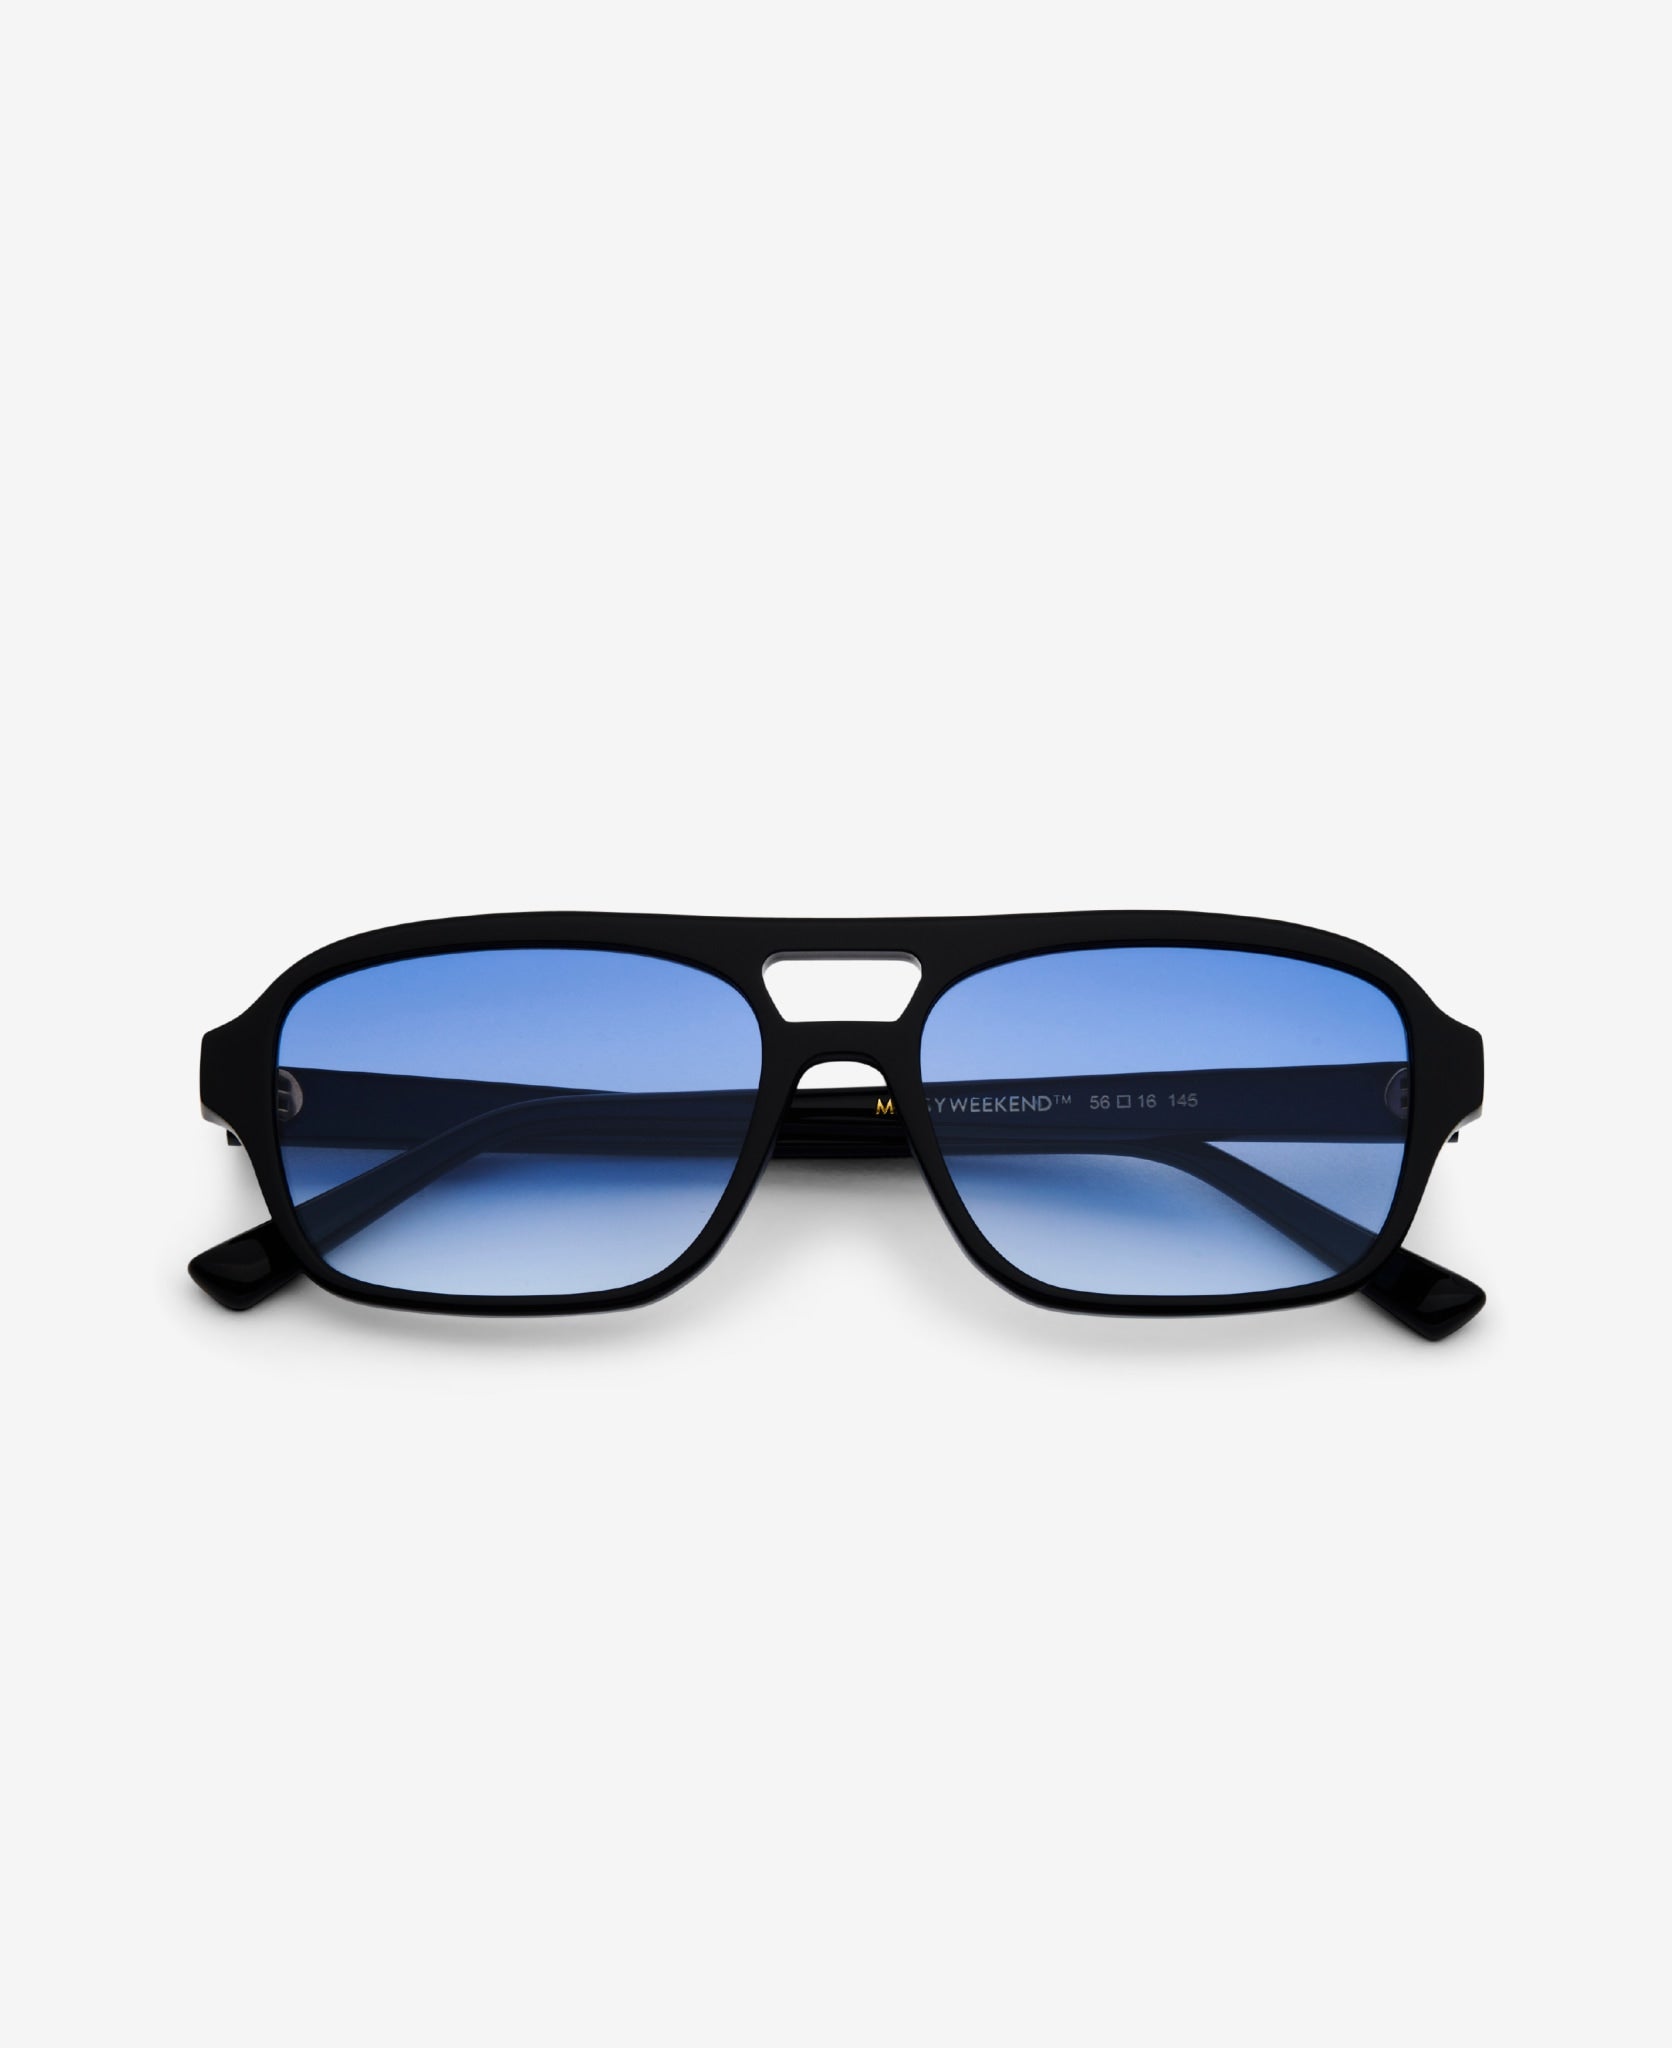 BURT Black - Blue Lens |MESSYWEEKEND Sunglasses Aviator –